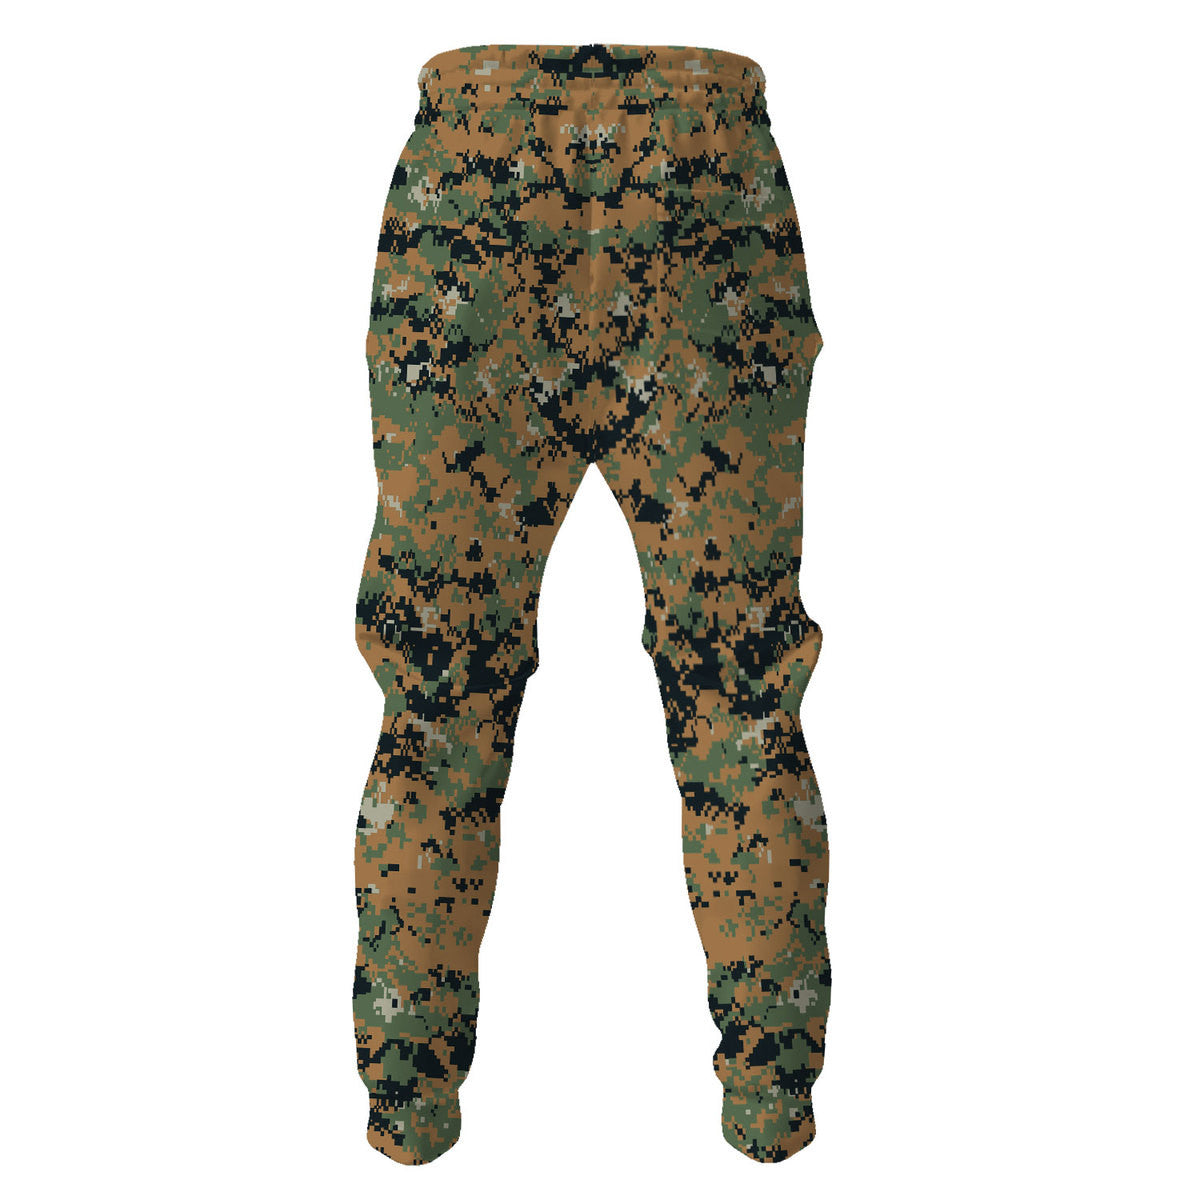 American MARPAT Marine pattern Woodland Camo Pants